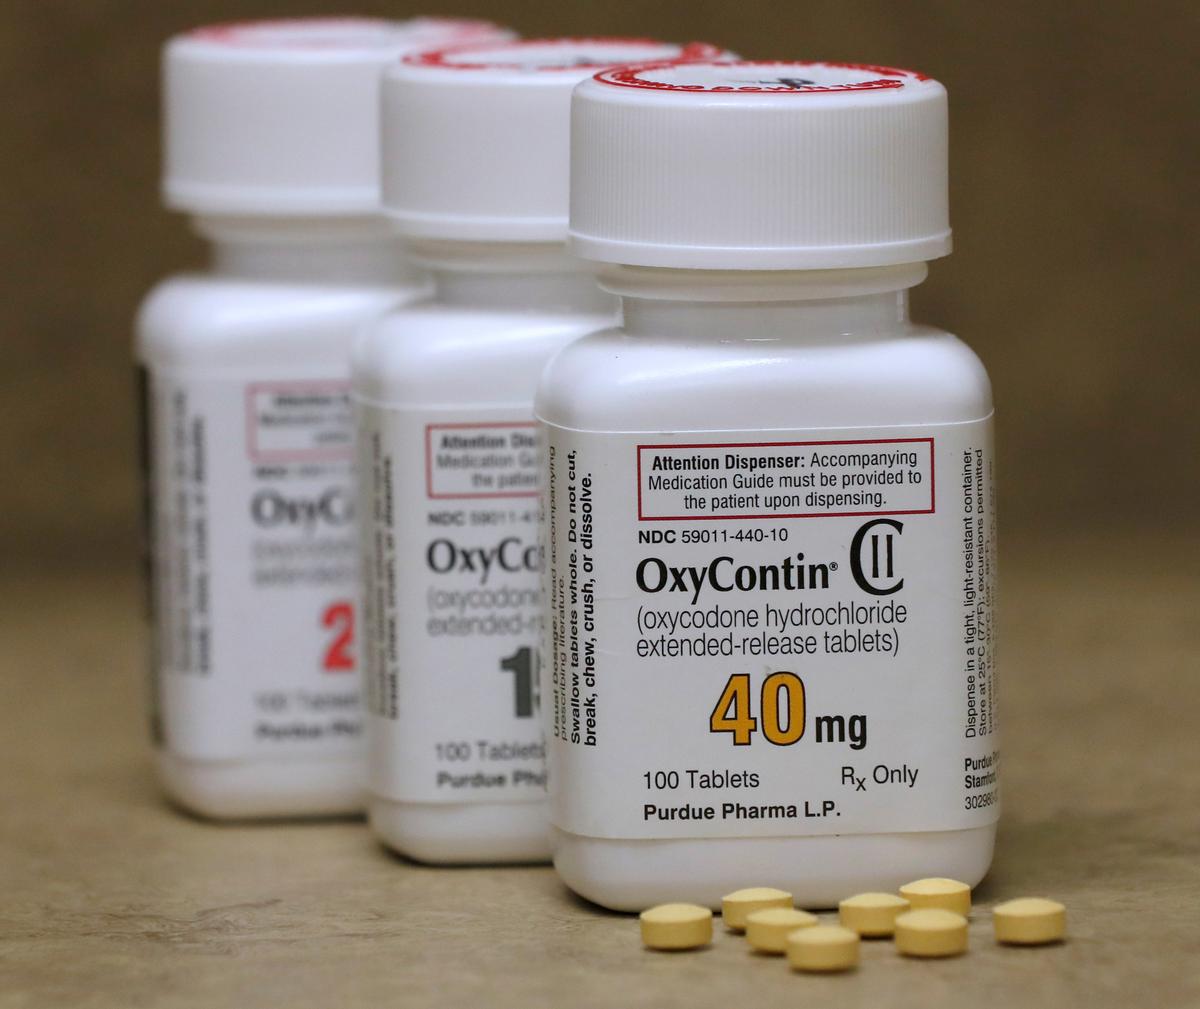 [NEWS] Purdue Pharma reaches tentative opioid settlement: sources – Loganspace AI